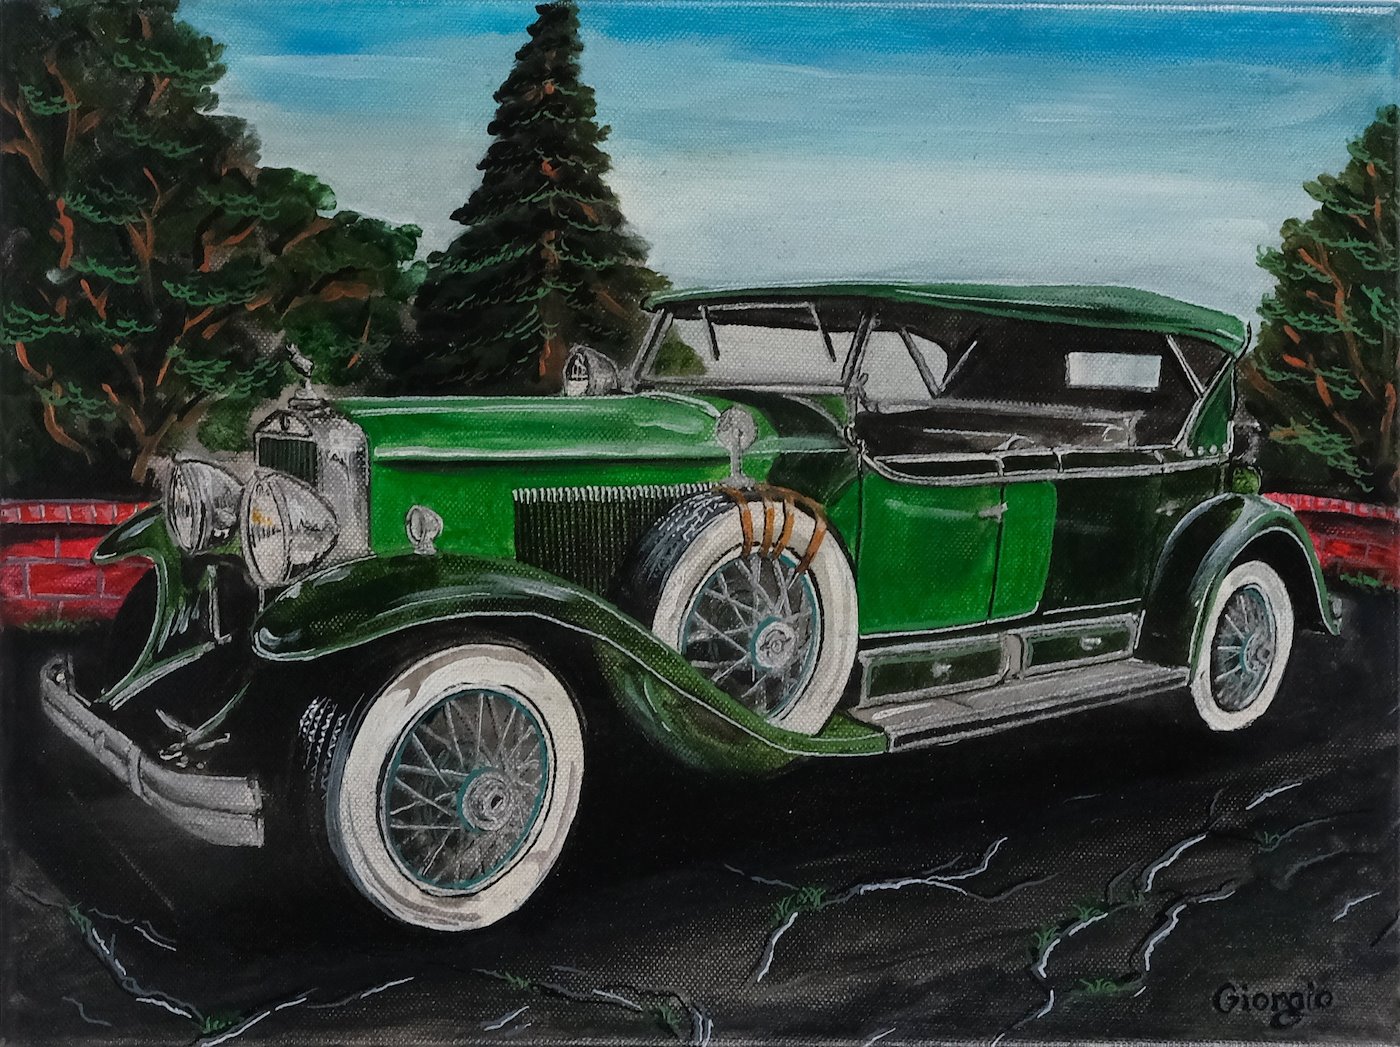 Giorgio - 1929 Cadillac Phaeton